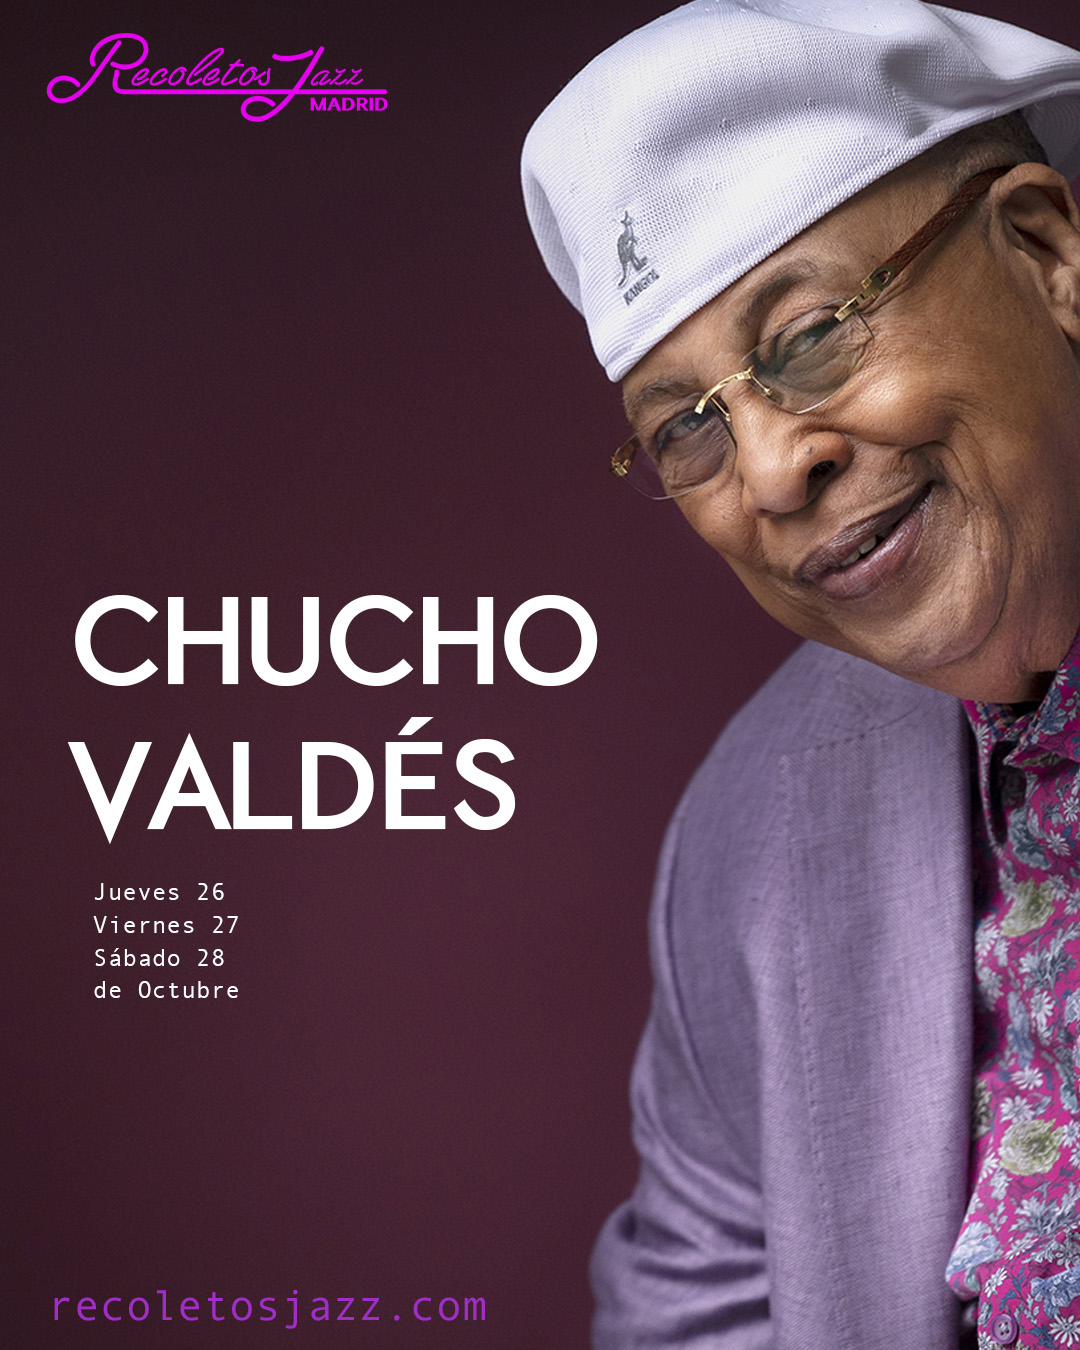 CHUCHO VALDES en recoletos jazz madrid